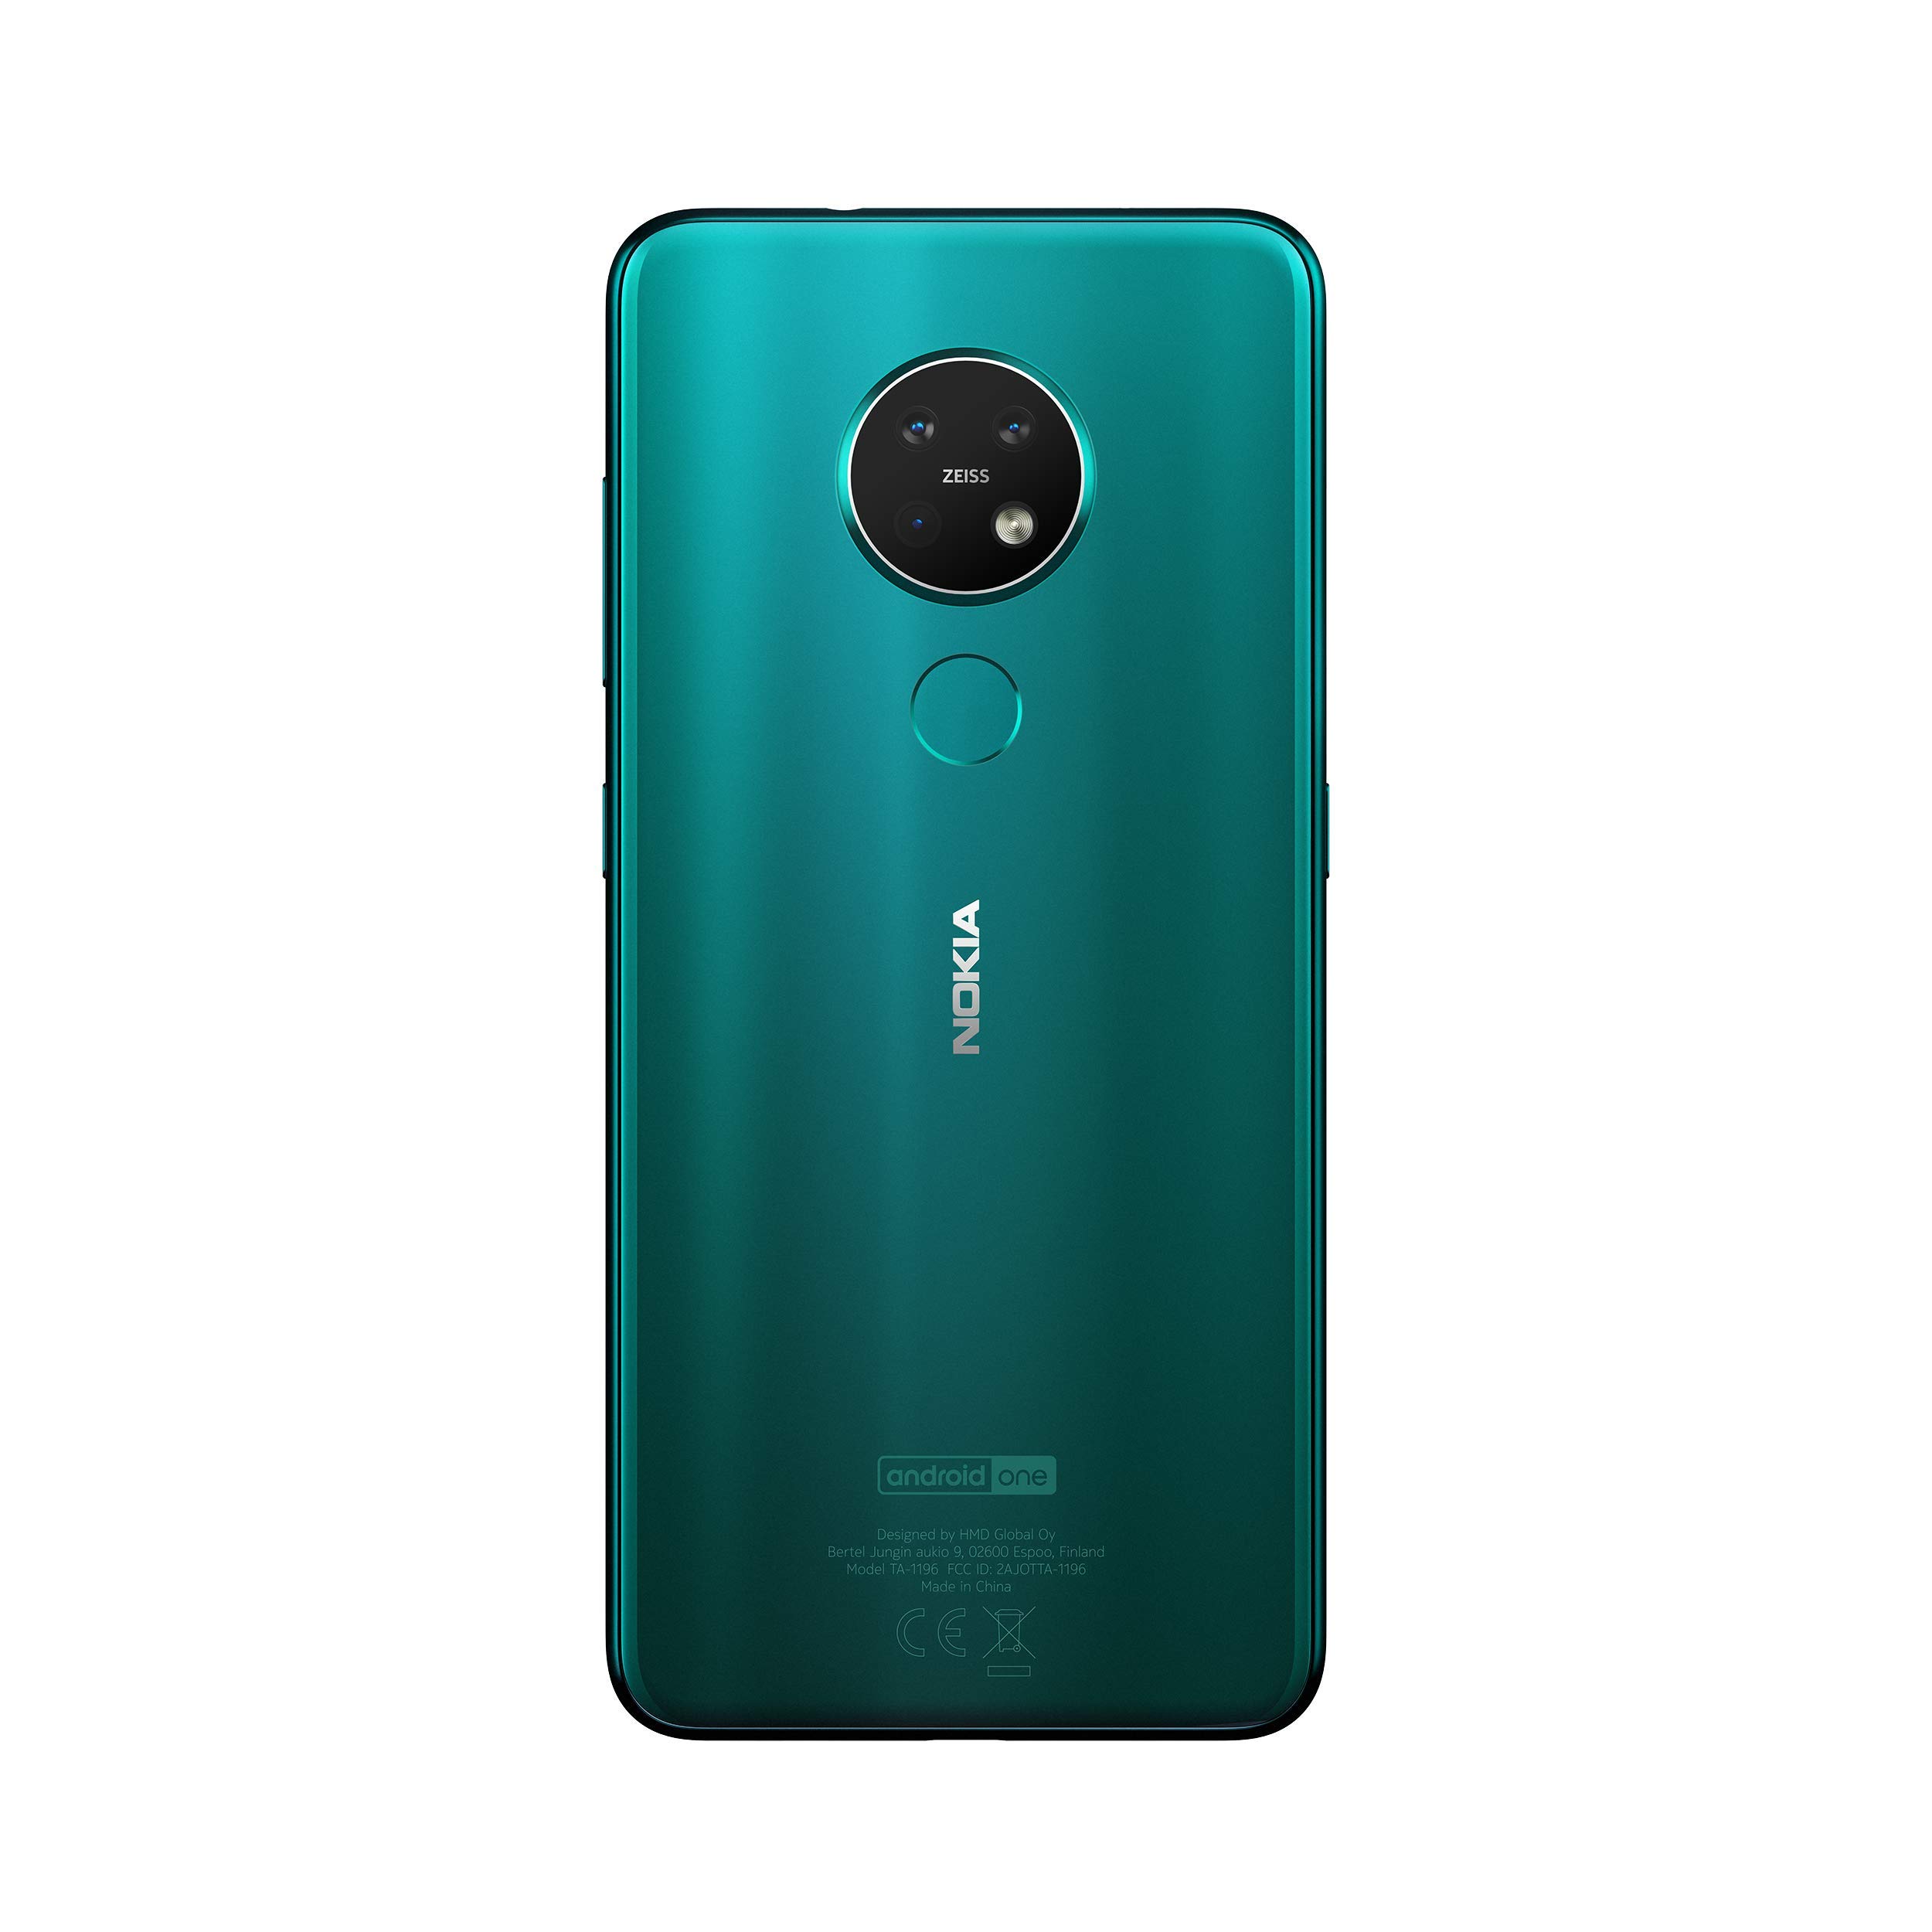 Nokia 7,2 64GB LTE DS cyan green Smartphone (2019) hervorragend